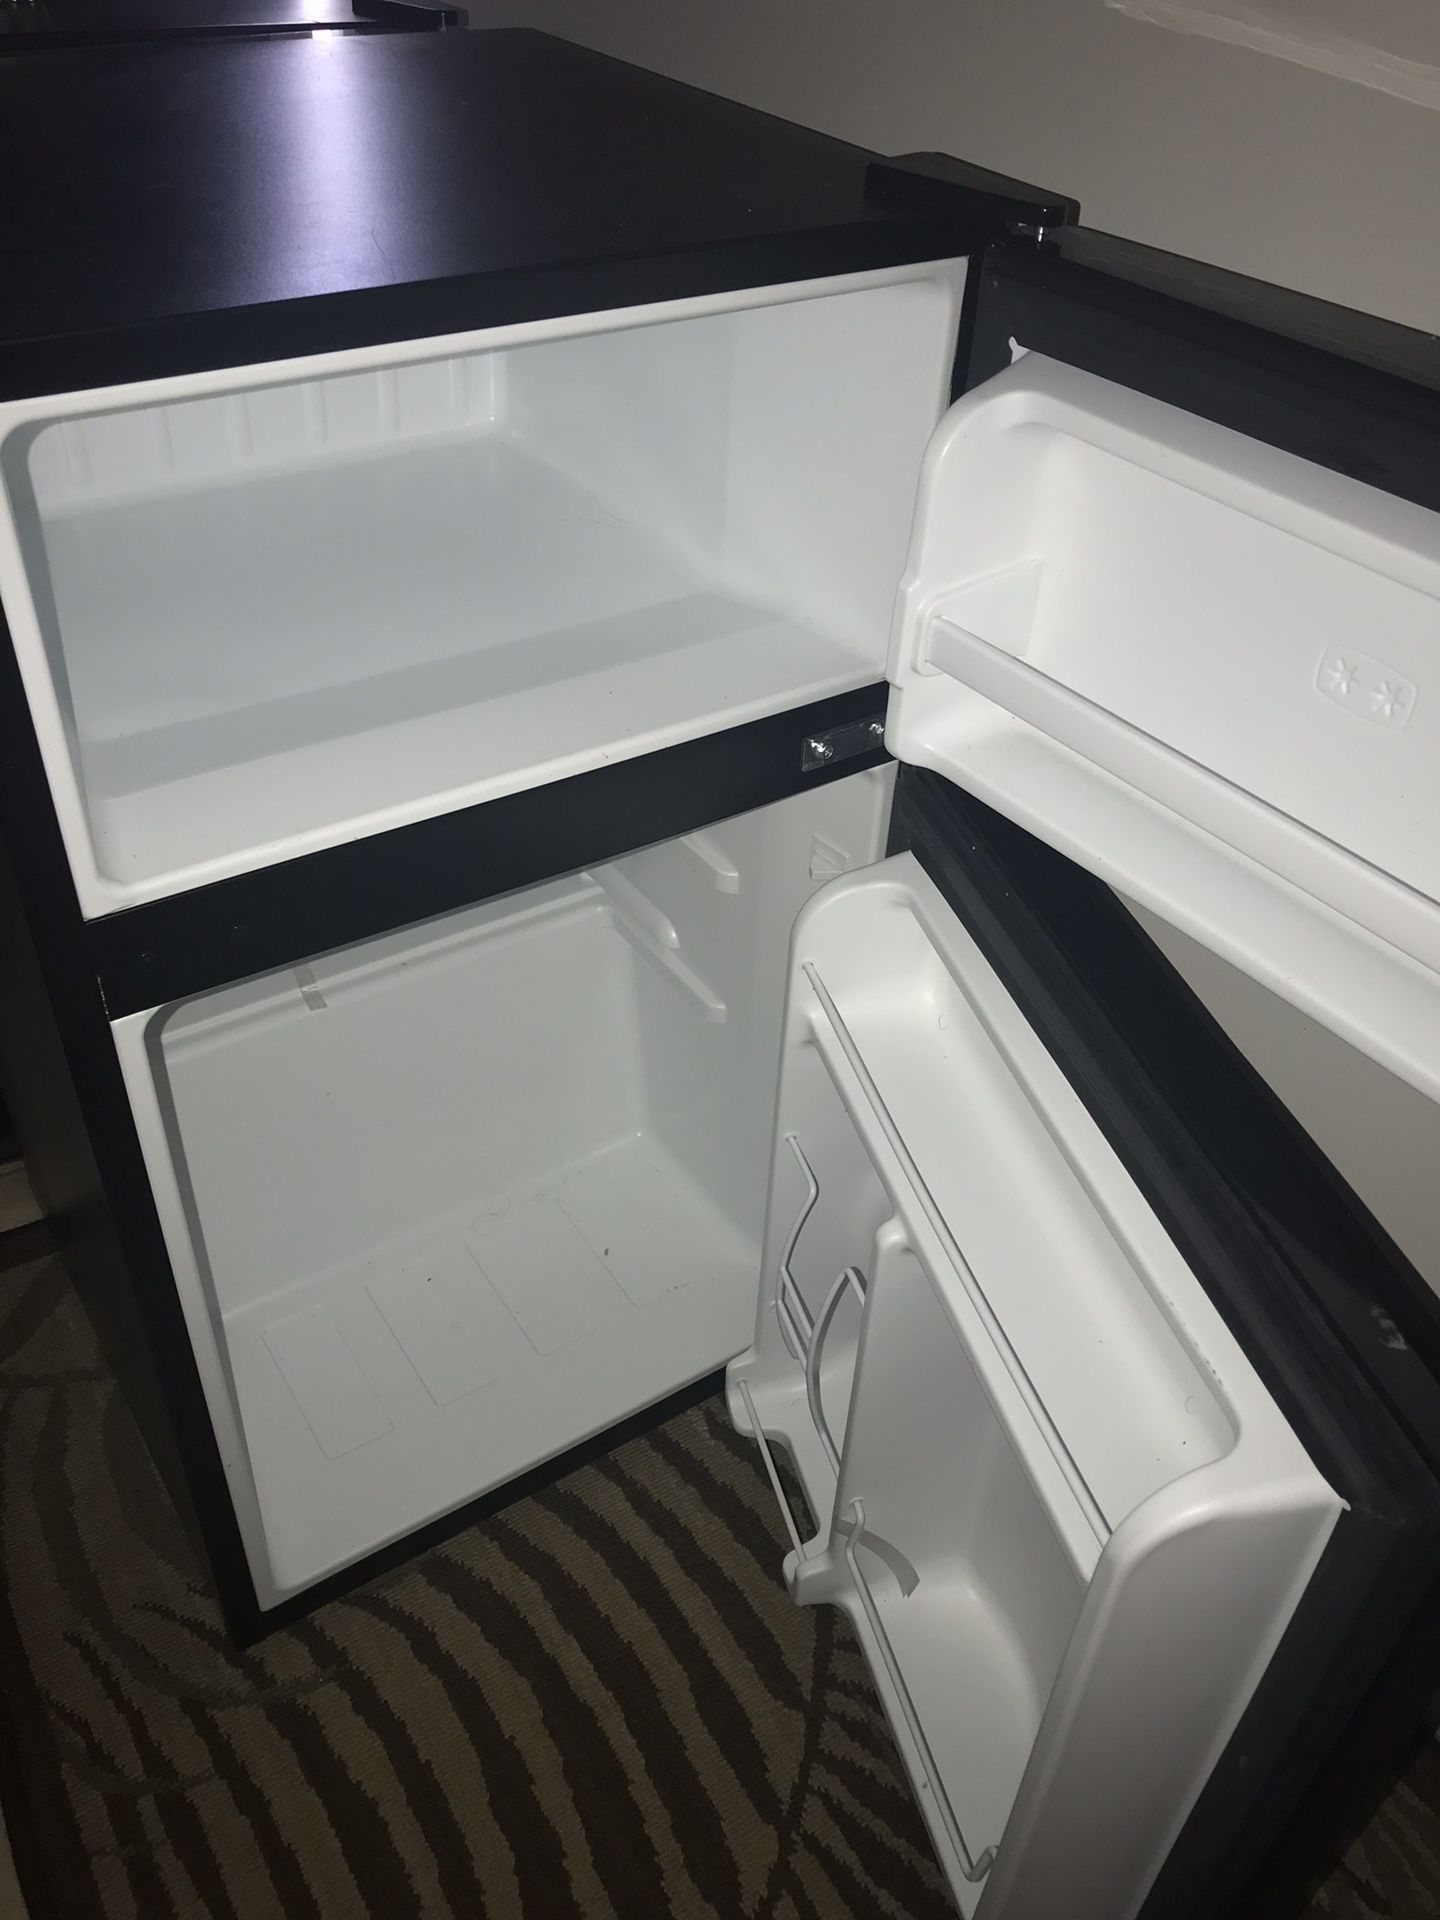 Galanz dorm/mini refrigerator with freezer